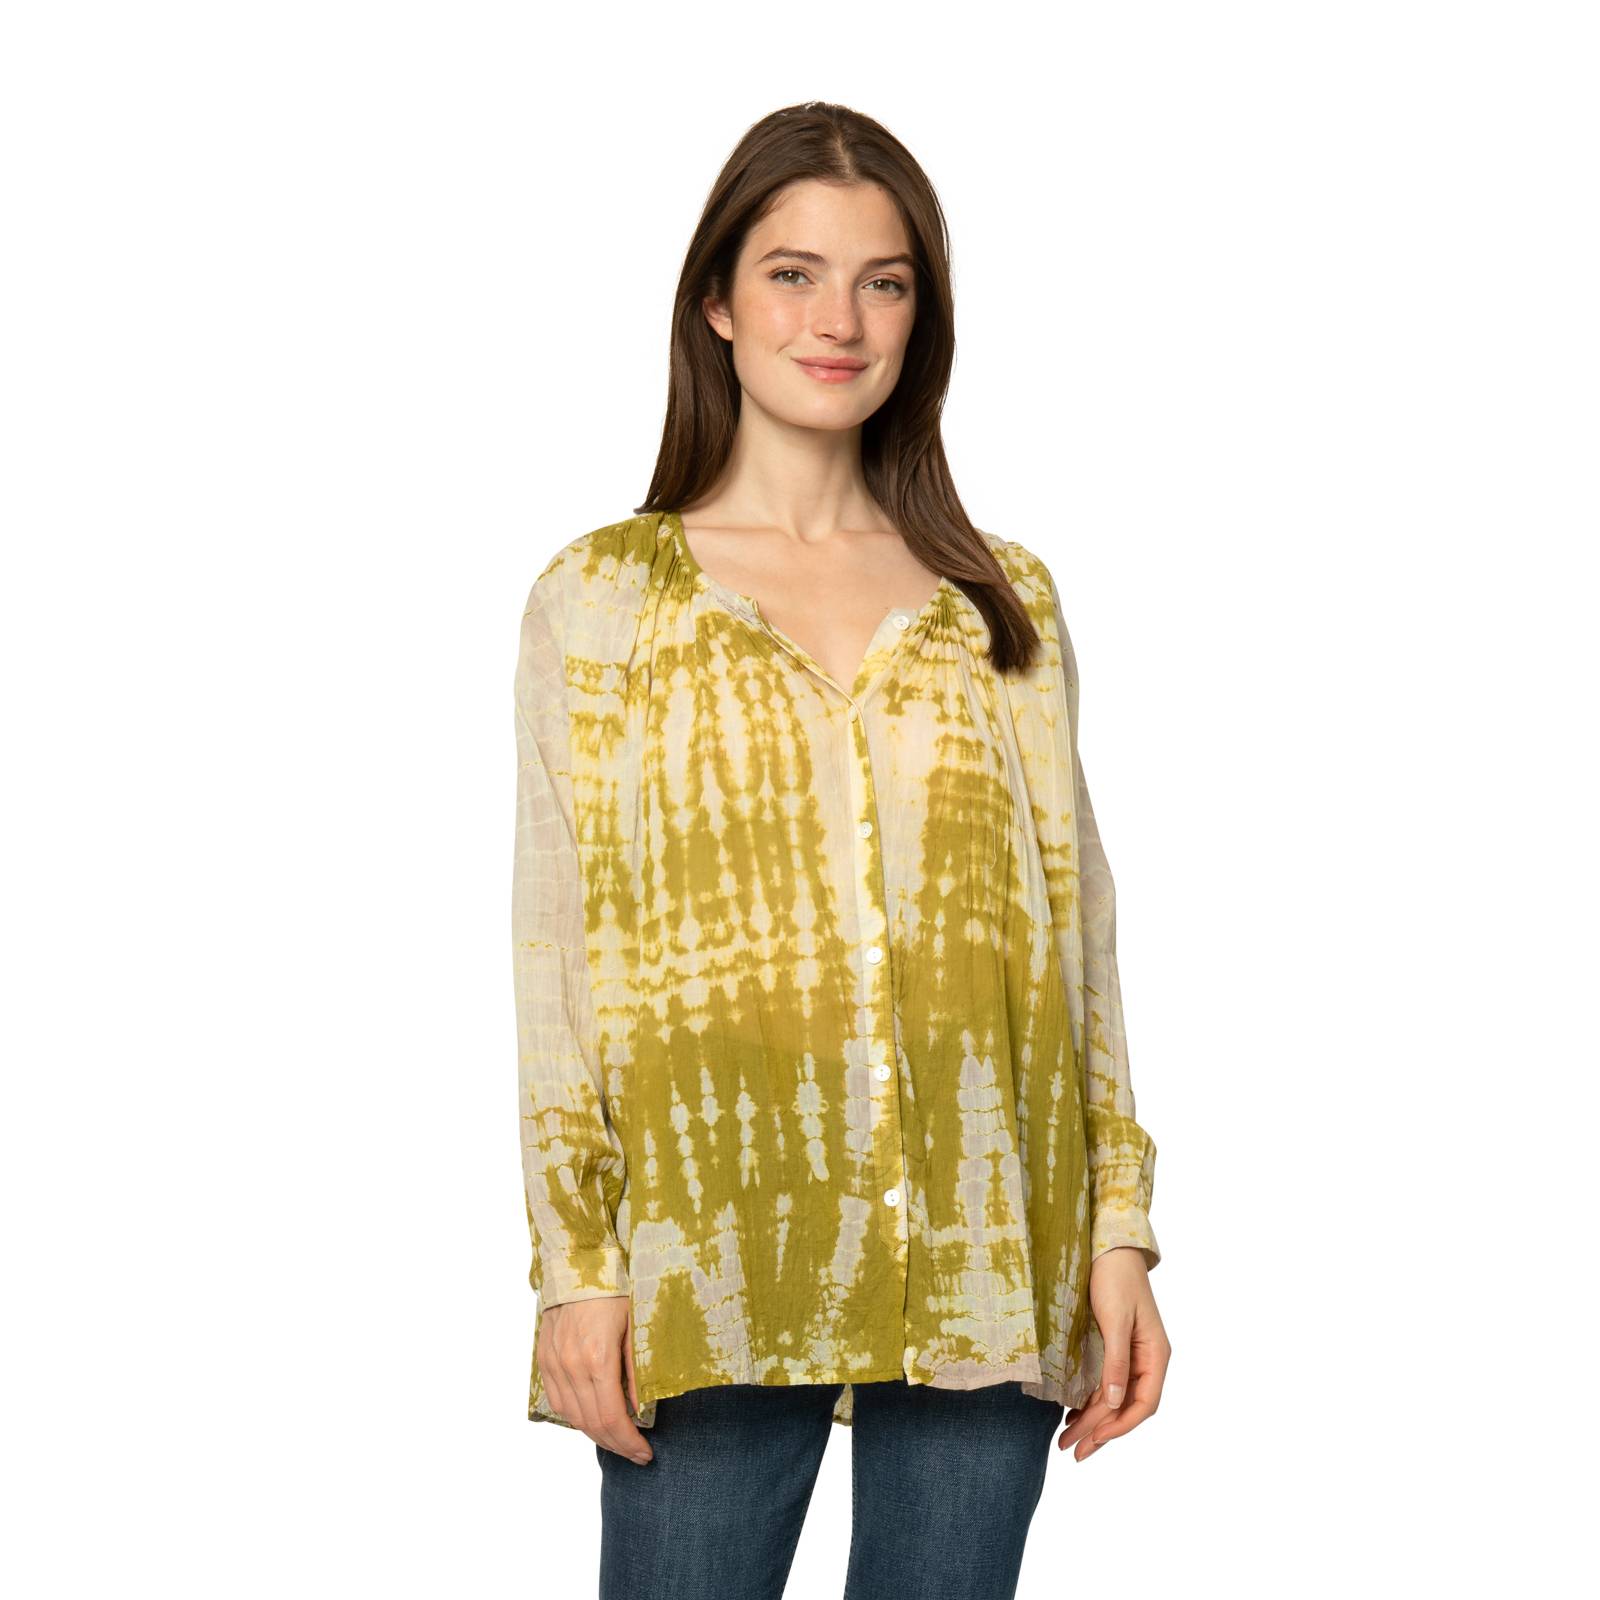 Chemises et blouses Chemise Chloe Tie & dye - 100% Coton Ethnique VT3406 KAKI BEIGE